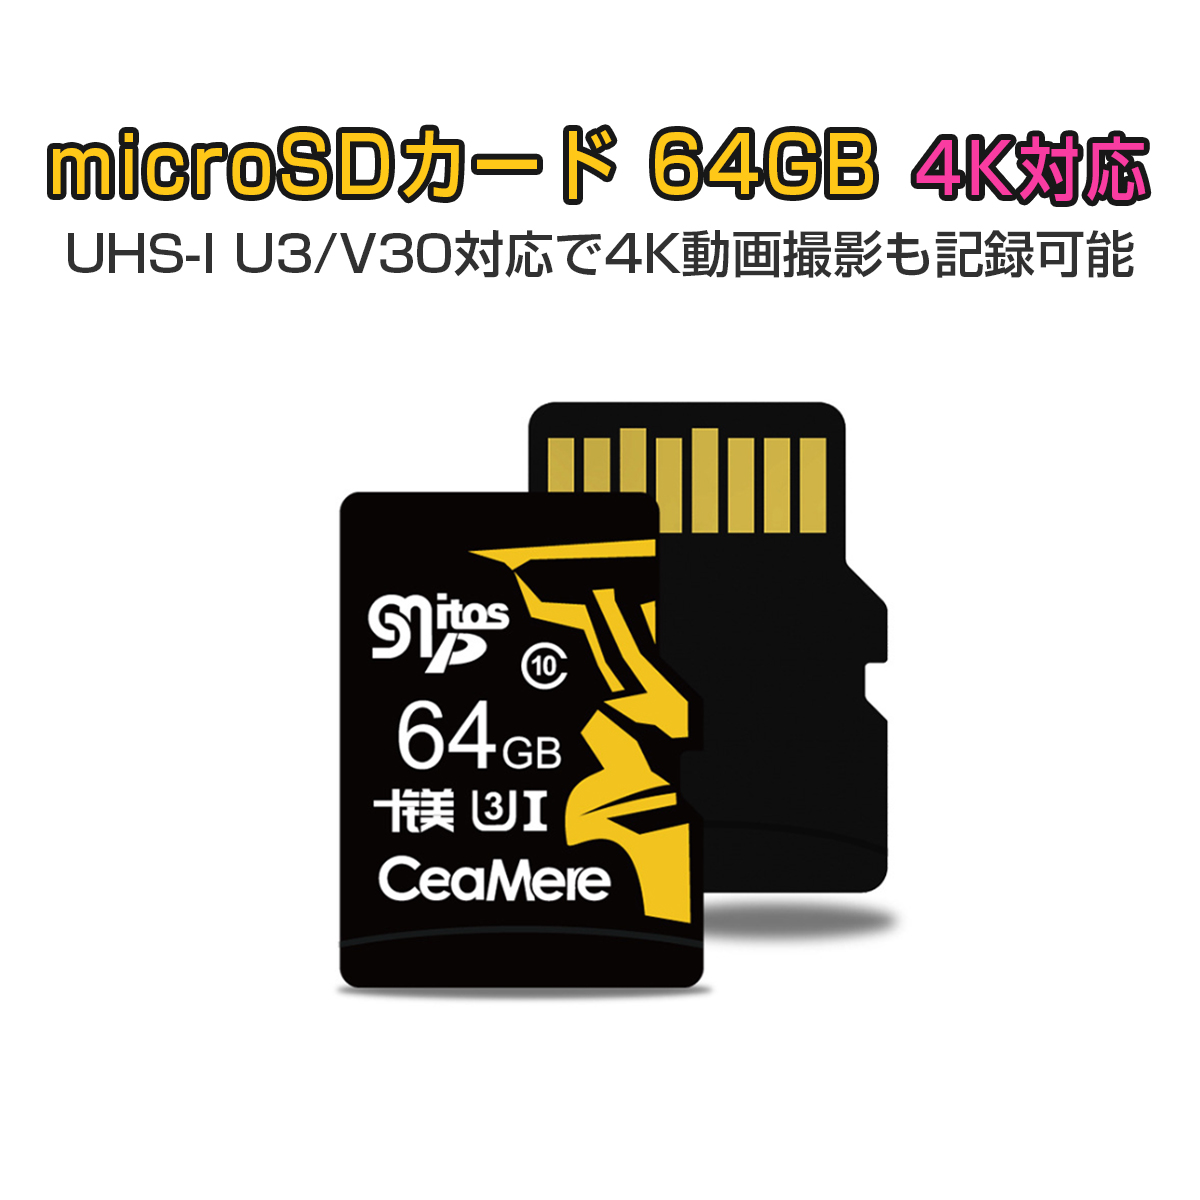 MicroSDカード 64GB UHS-I V30 超高速 最大95MB/sec 3D MLC NAND採用 ASチップ 高耐久 MicroSD マイクロSD microSDXC 300x SDカード変換アダプタ USBカードリーダー付き SDM便送料無料 1年保証